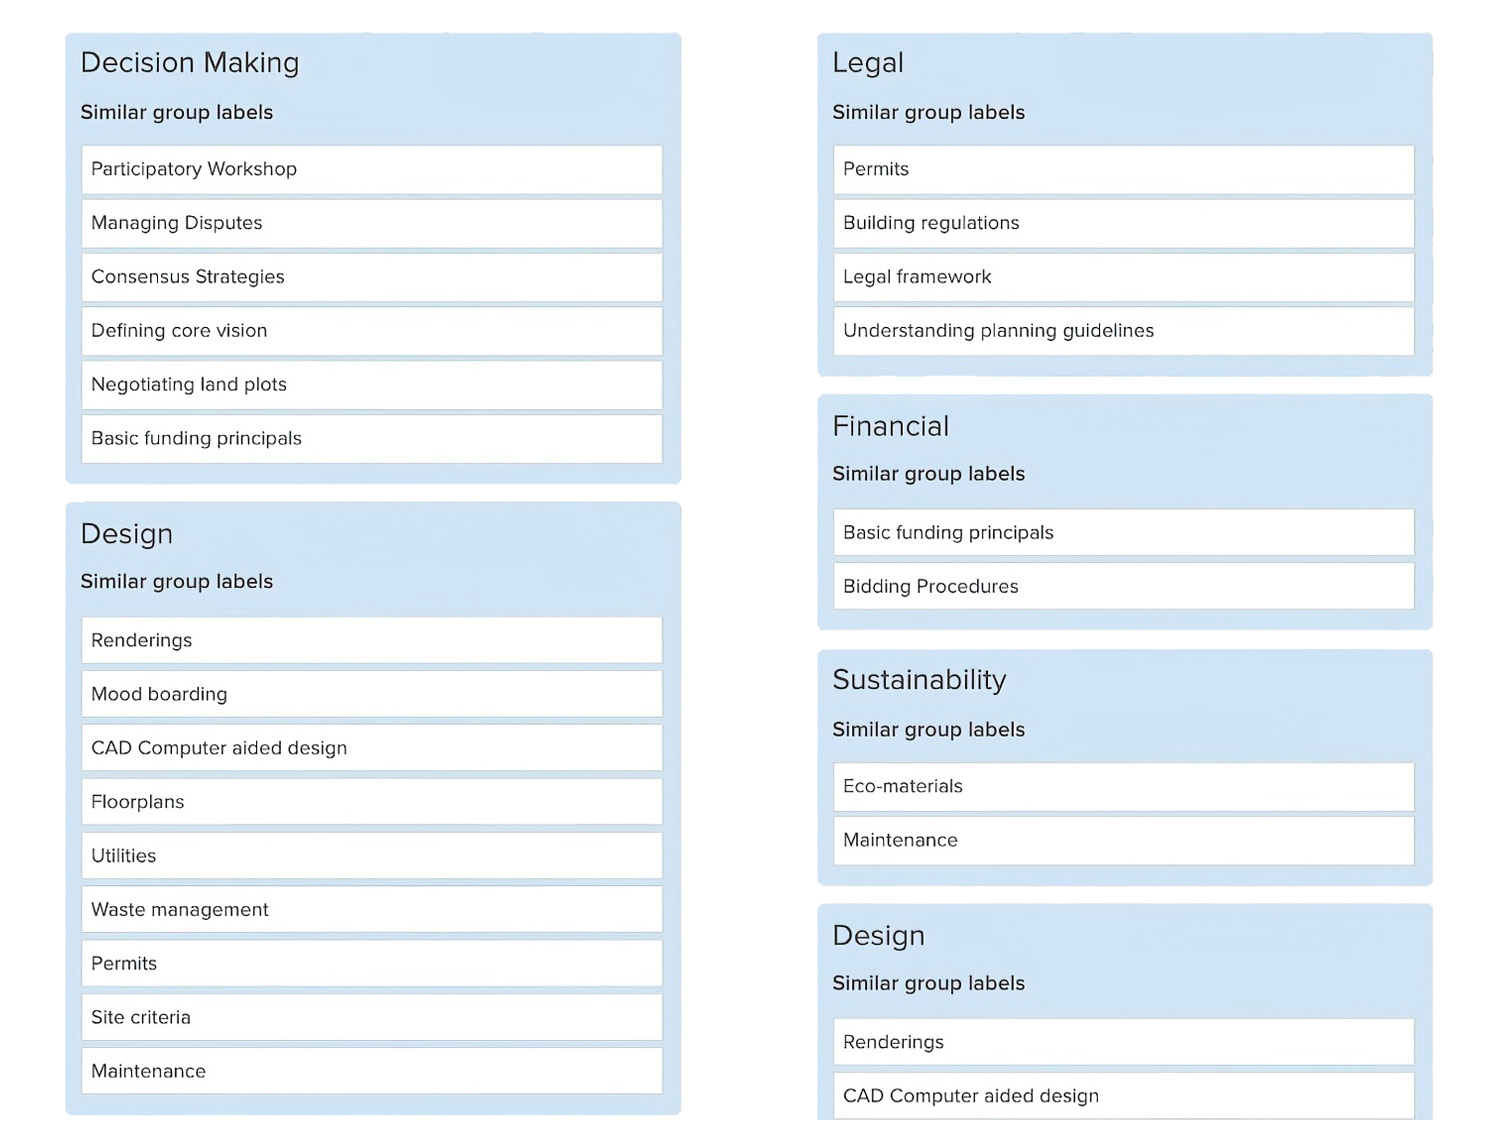 Digital card sorting image showing co-housing development categories